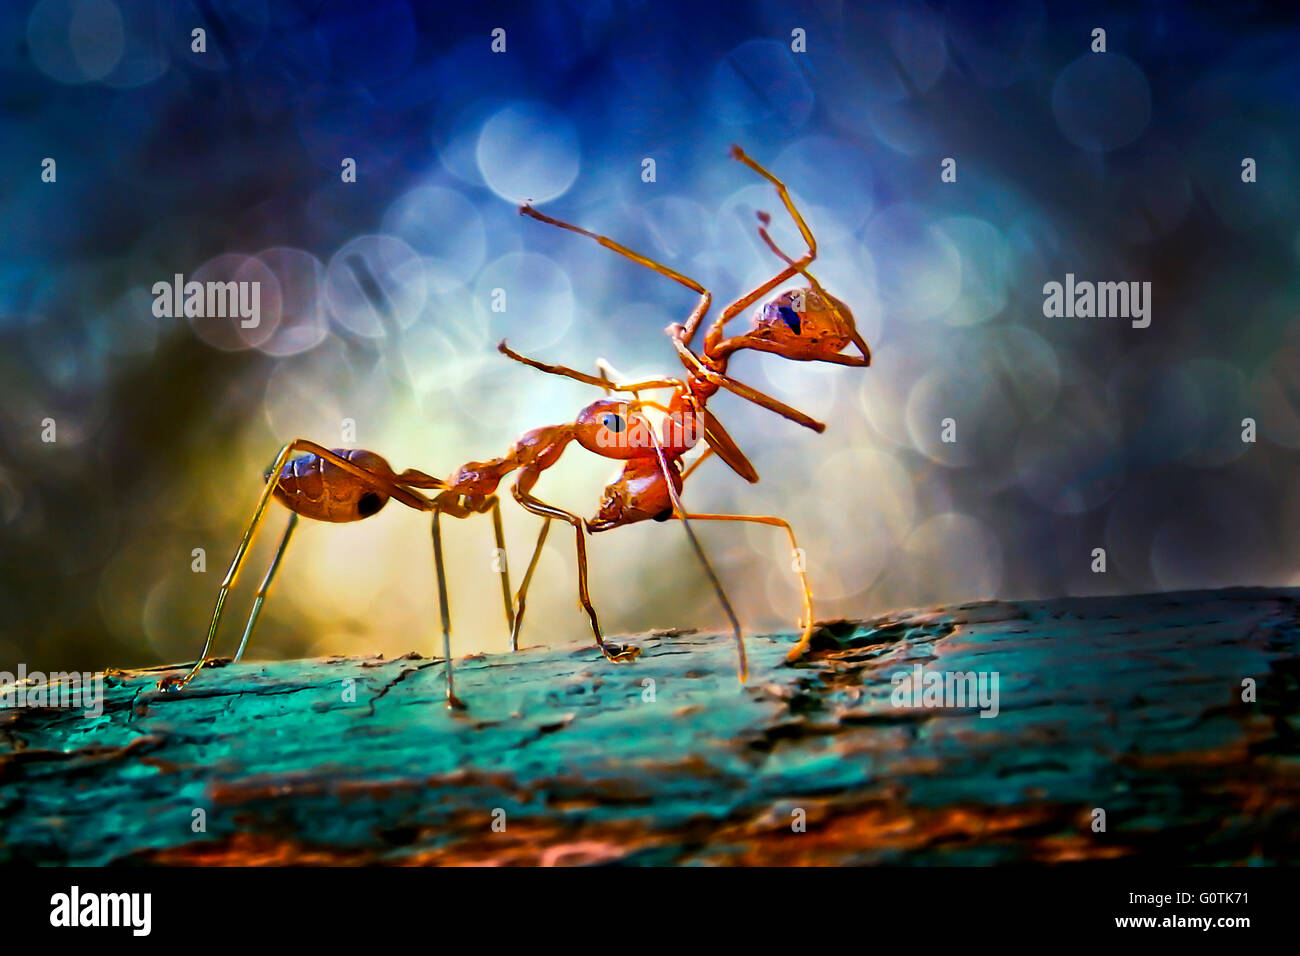 Two ants on piece of wood, Gorontalo, Indonesia Stock Photo